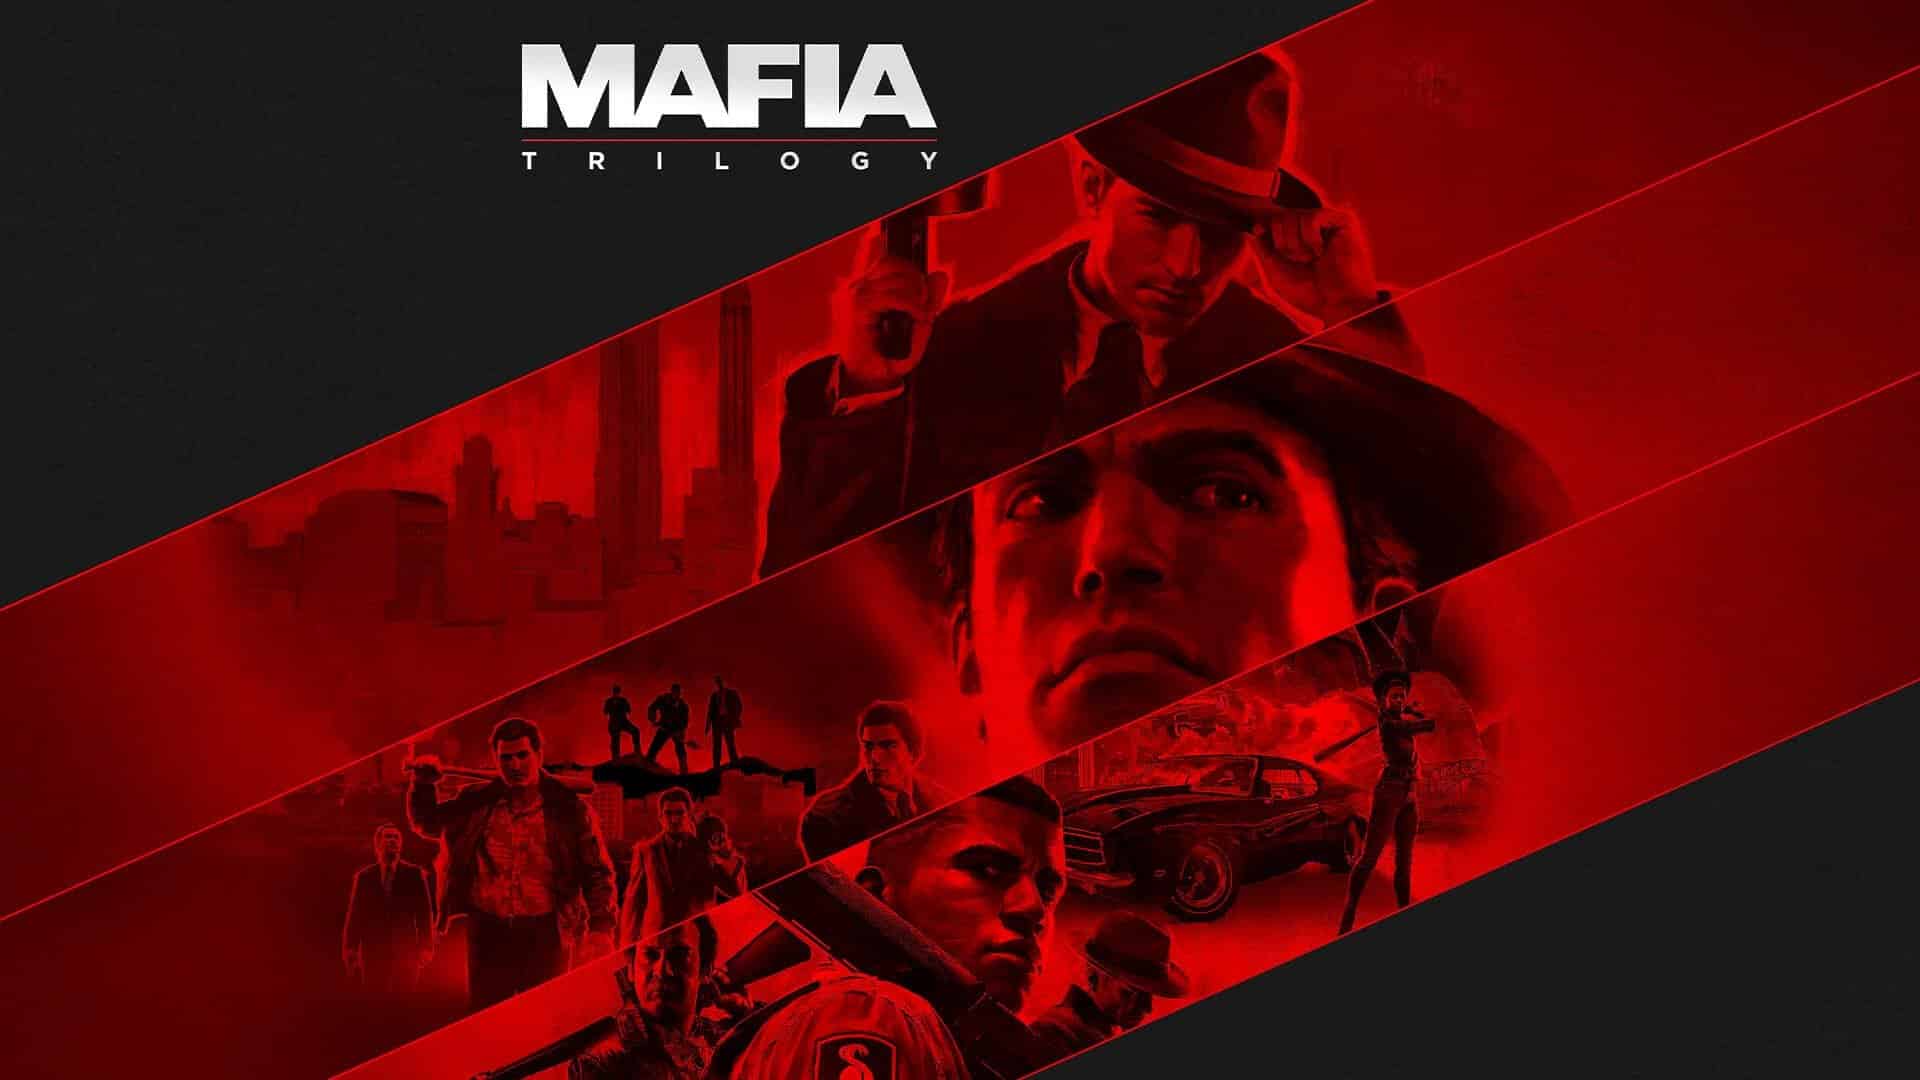 Mafia definitive edition: coletânea é adiada para setembro | 5925c051 diesel bundles mafia trilogy egs mafiatrilogy hangar13 g1a 00 1920x1080 bb8a4c86ab5c03c1759842bd9db6a22a58bf4305 | deep sky derelicts notícias